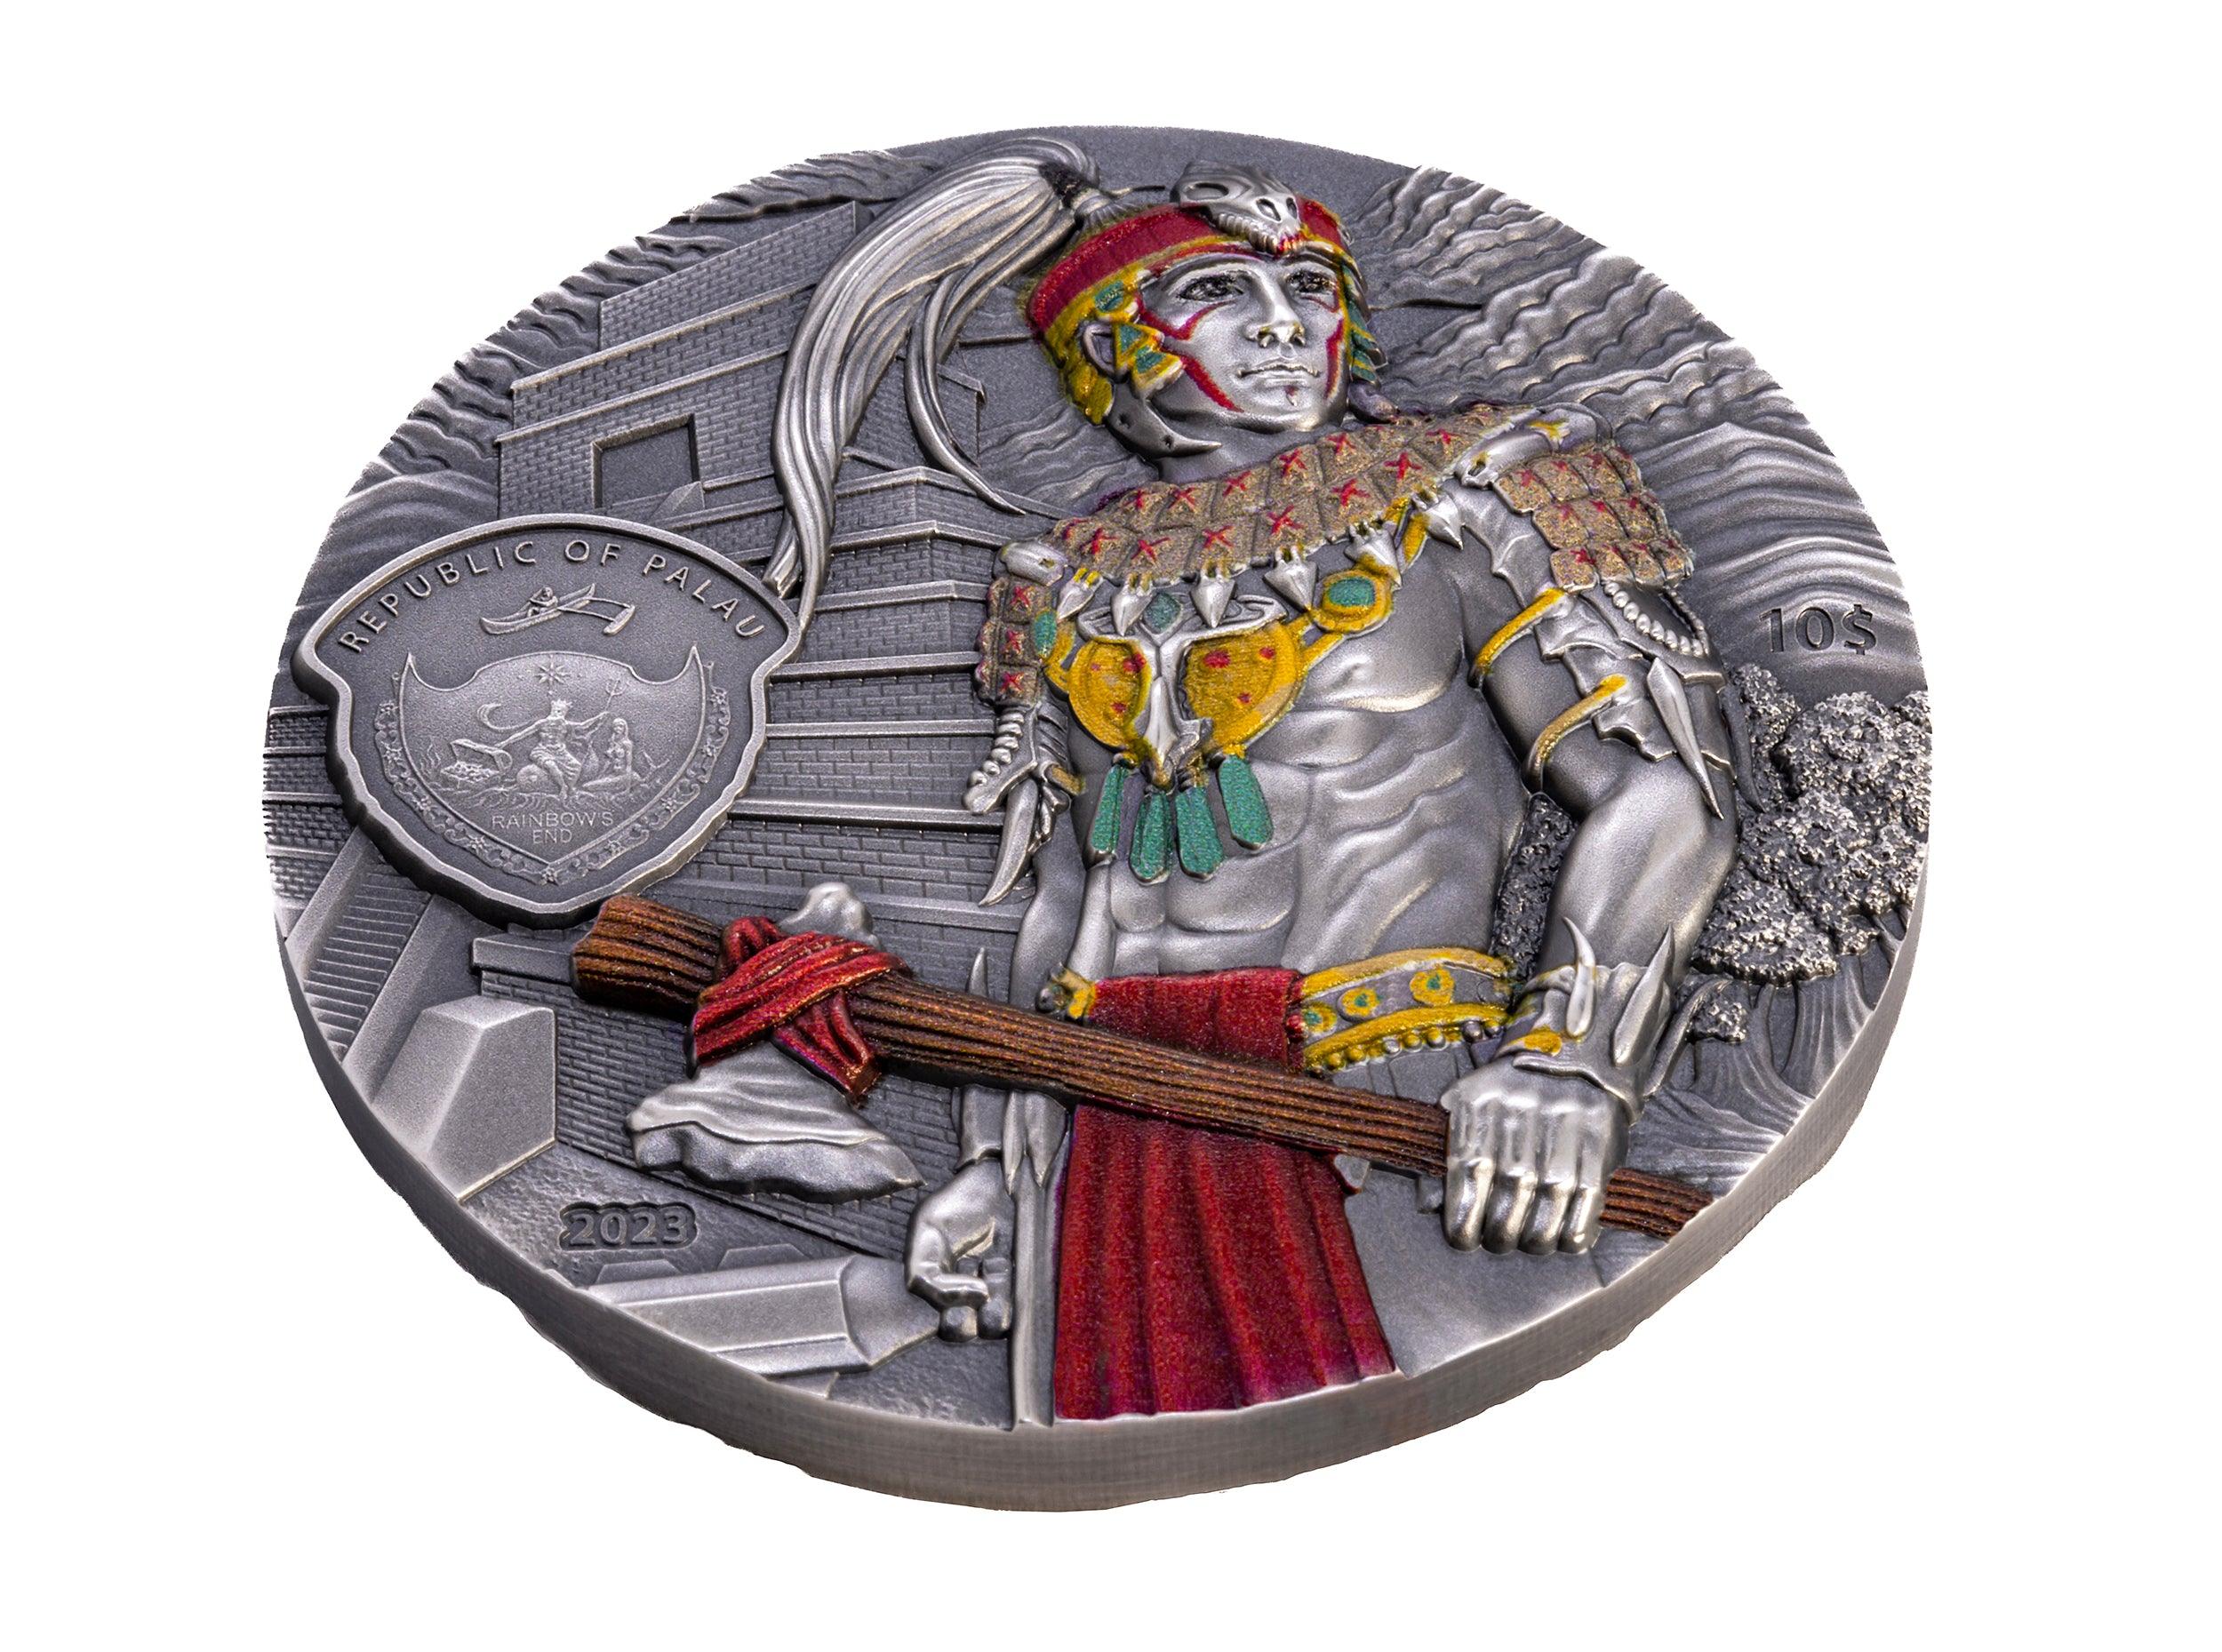 MAYANS Lost Civilizations 2 Oz Silver Coin $10 Palau 2023 - PARTHAVA COIN